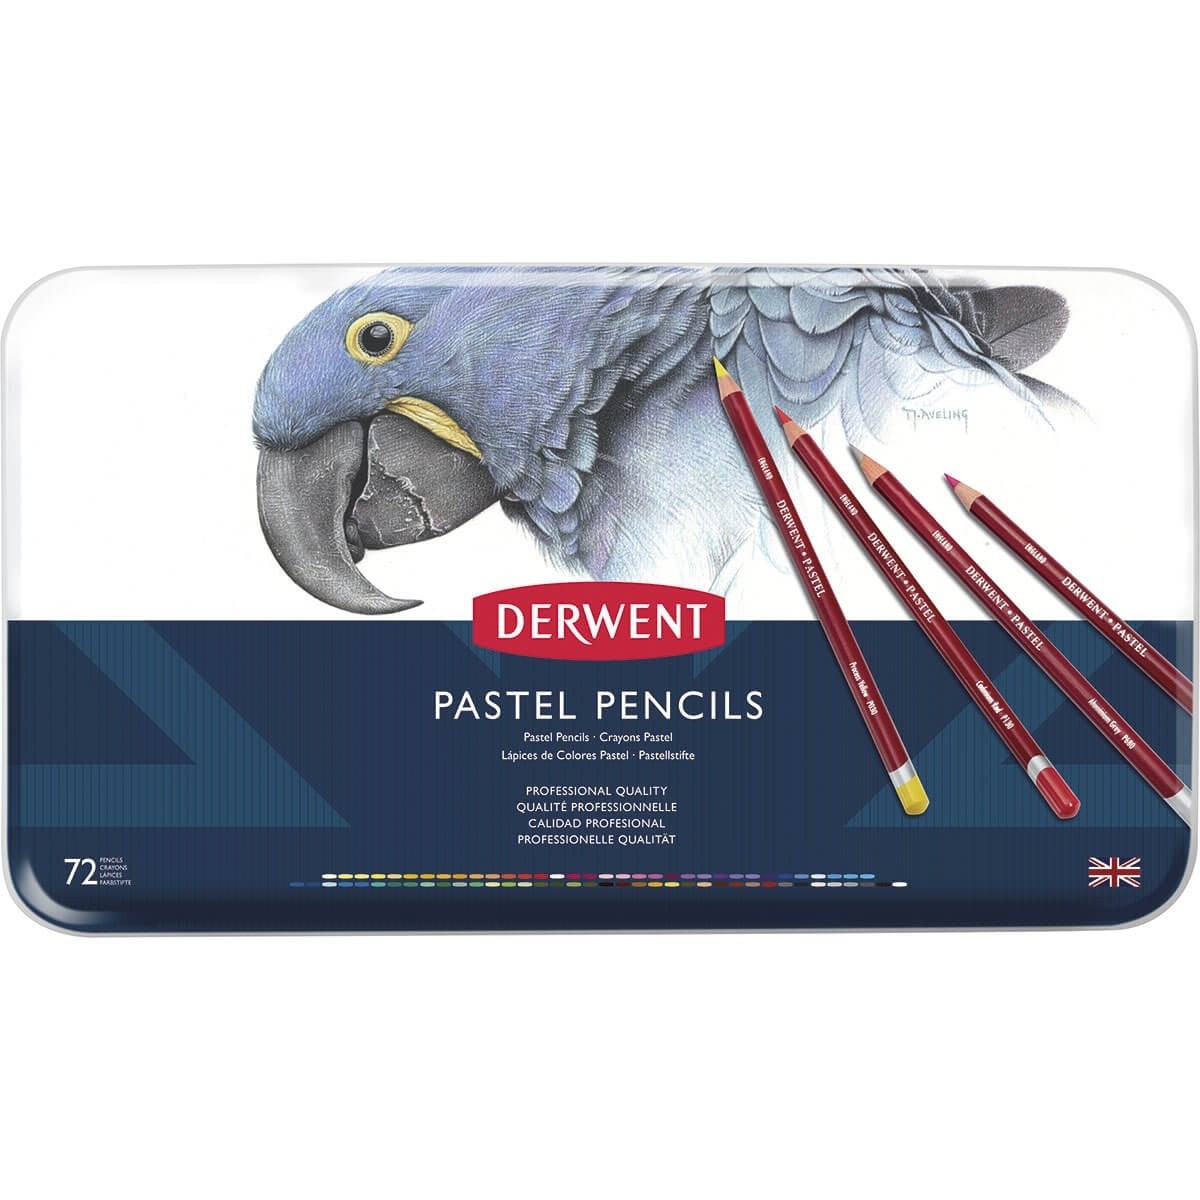 Estojos de Metal com 72 Lapis Pastel Pencils